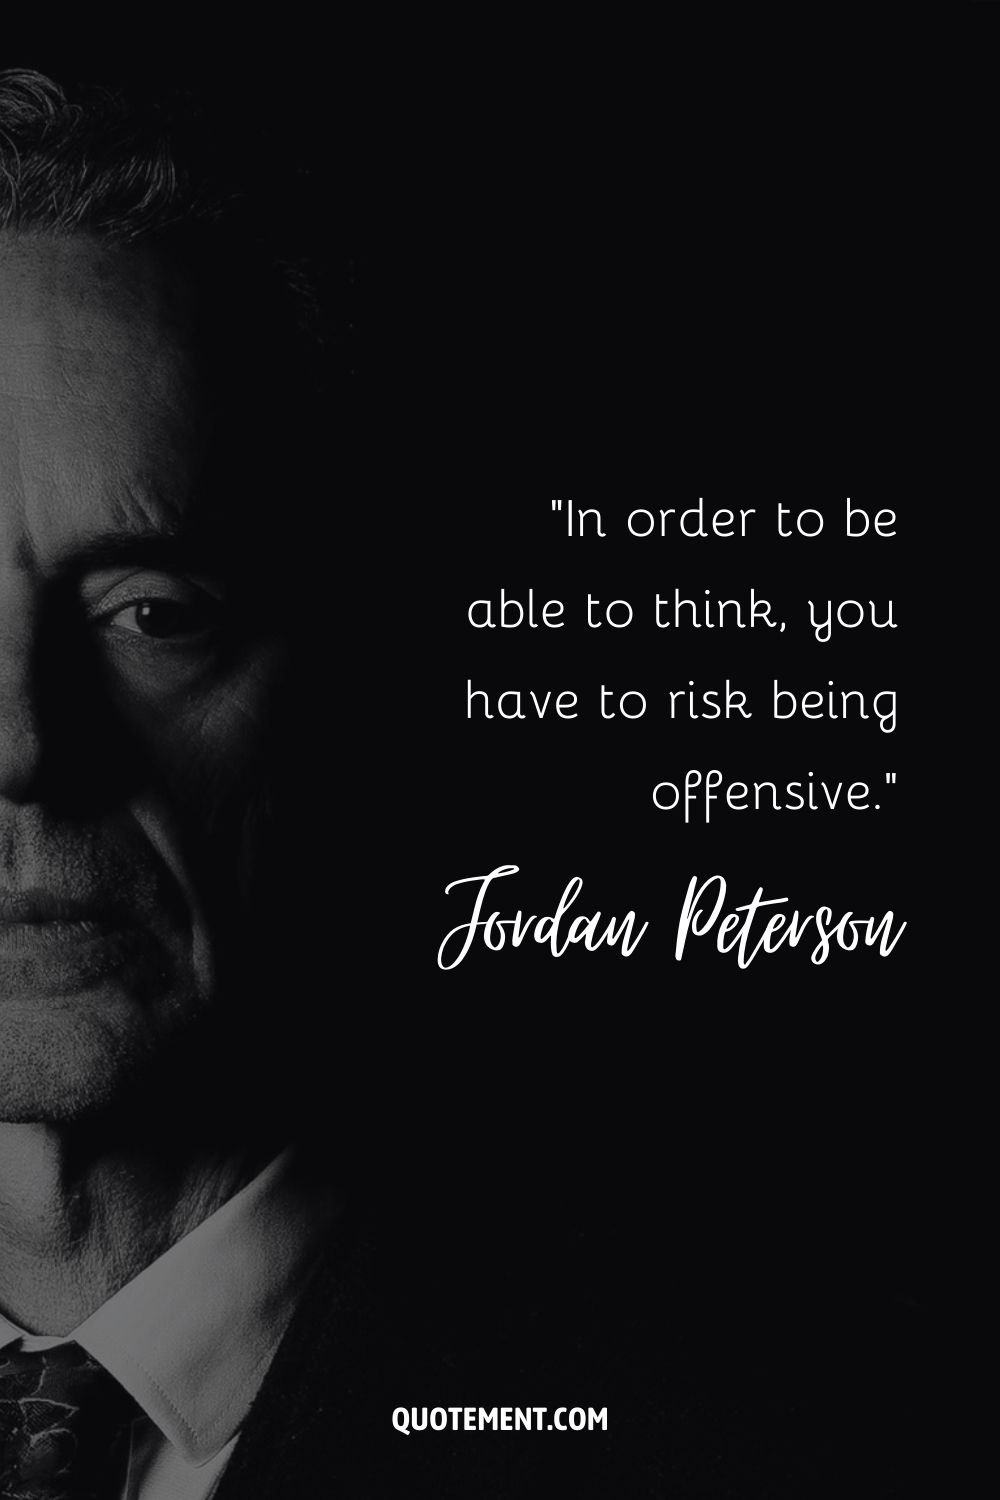 Jordan Peterson quote on risk.